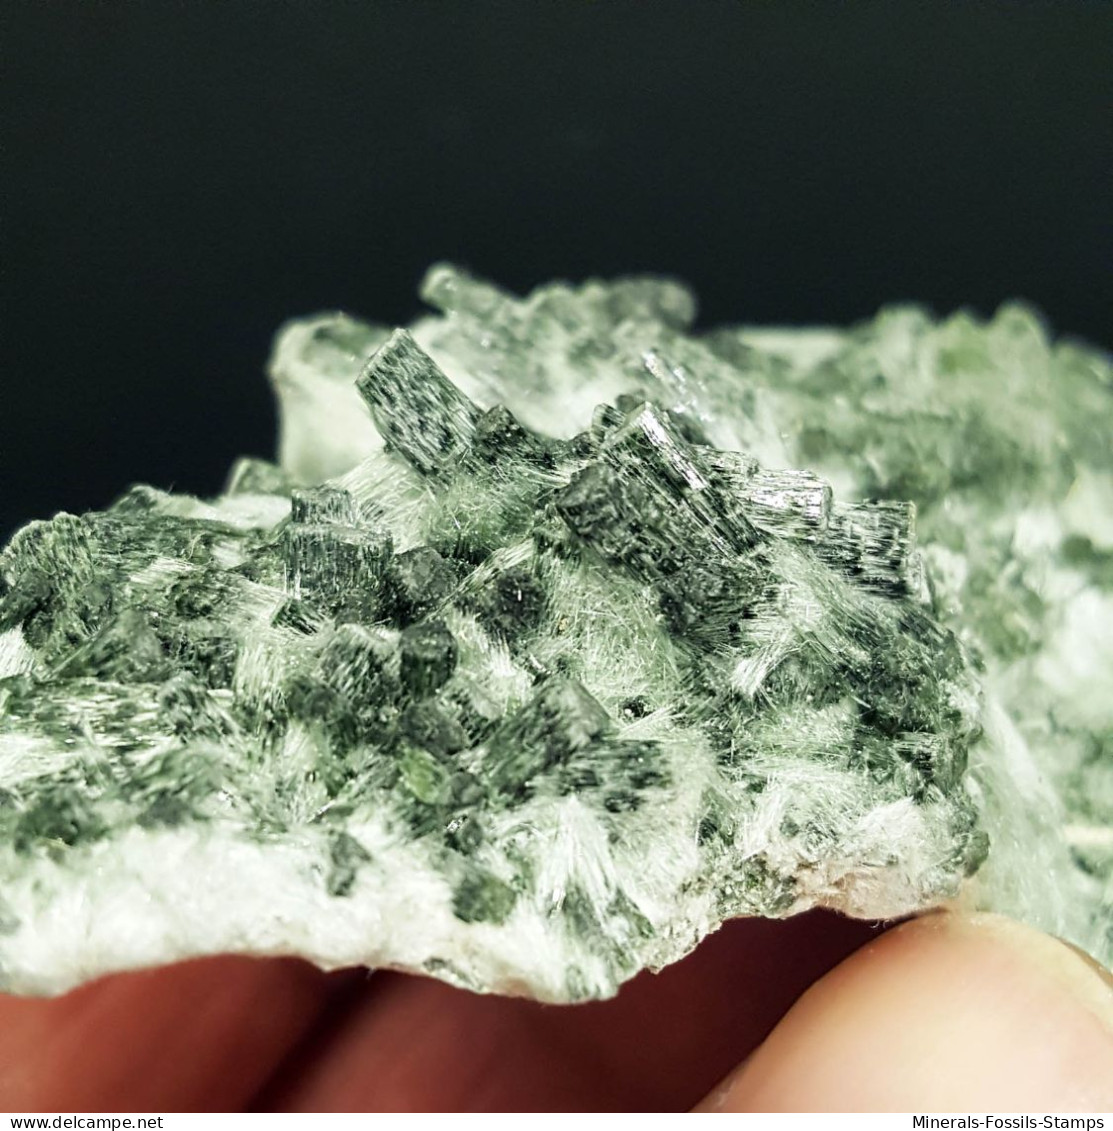 #1.02 - RARA TRAVERSELLITE var. Diopside cristalli (Traversella Mine, Torino, Piemonte, Italia)